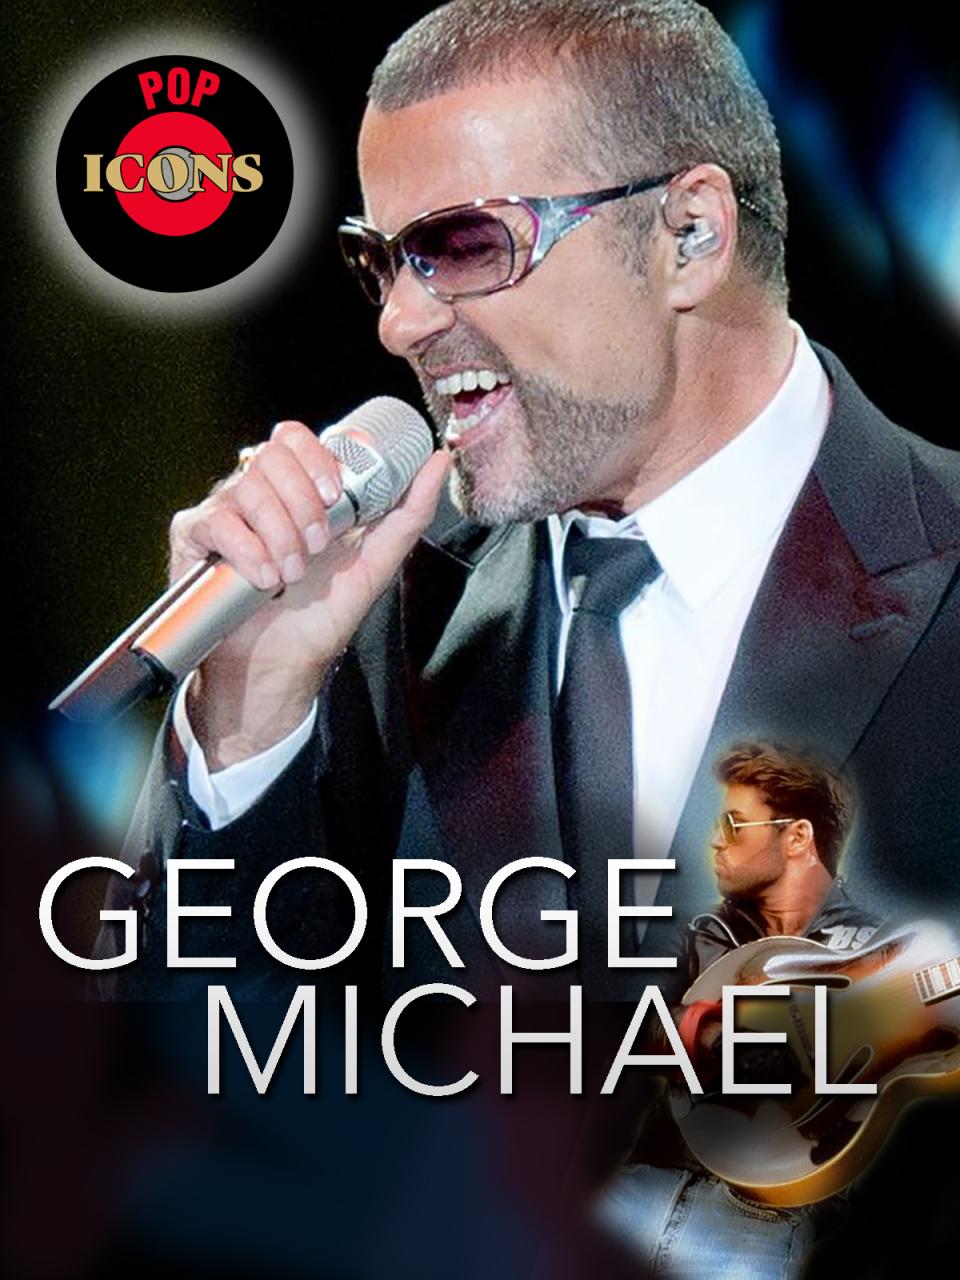 Pop Icons George Michael